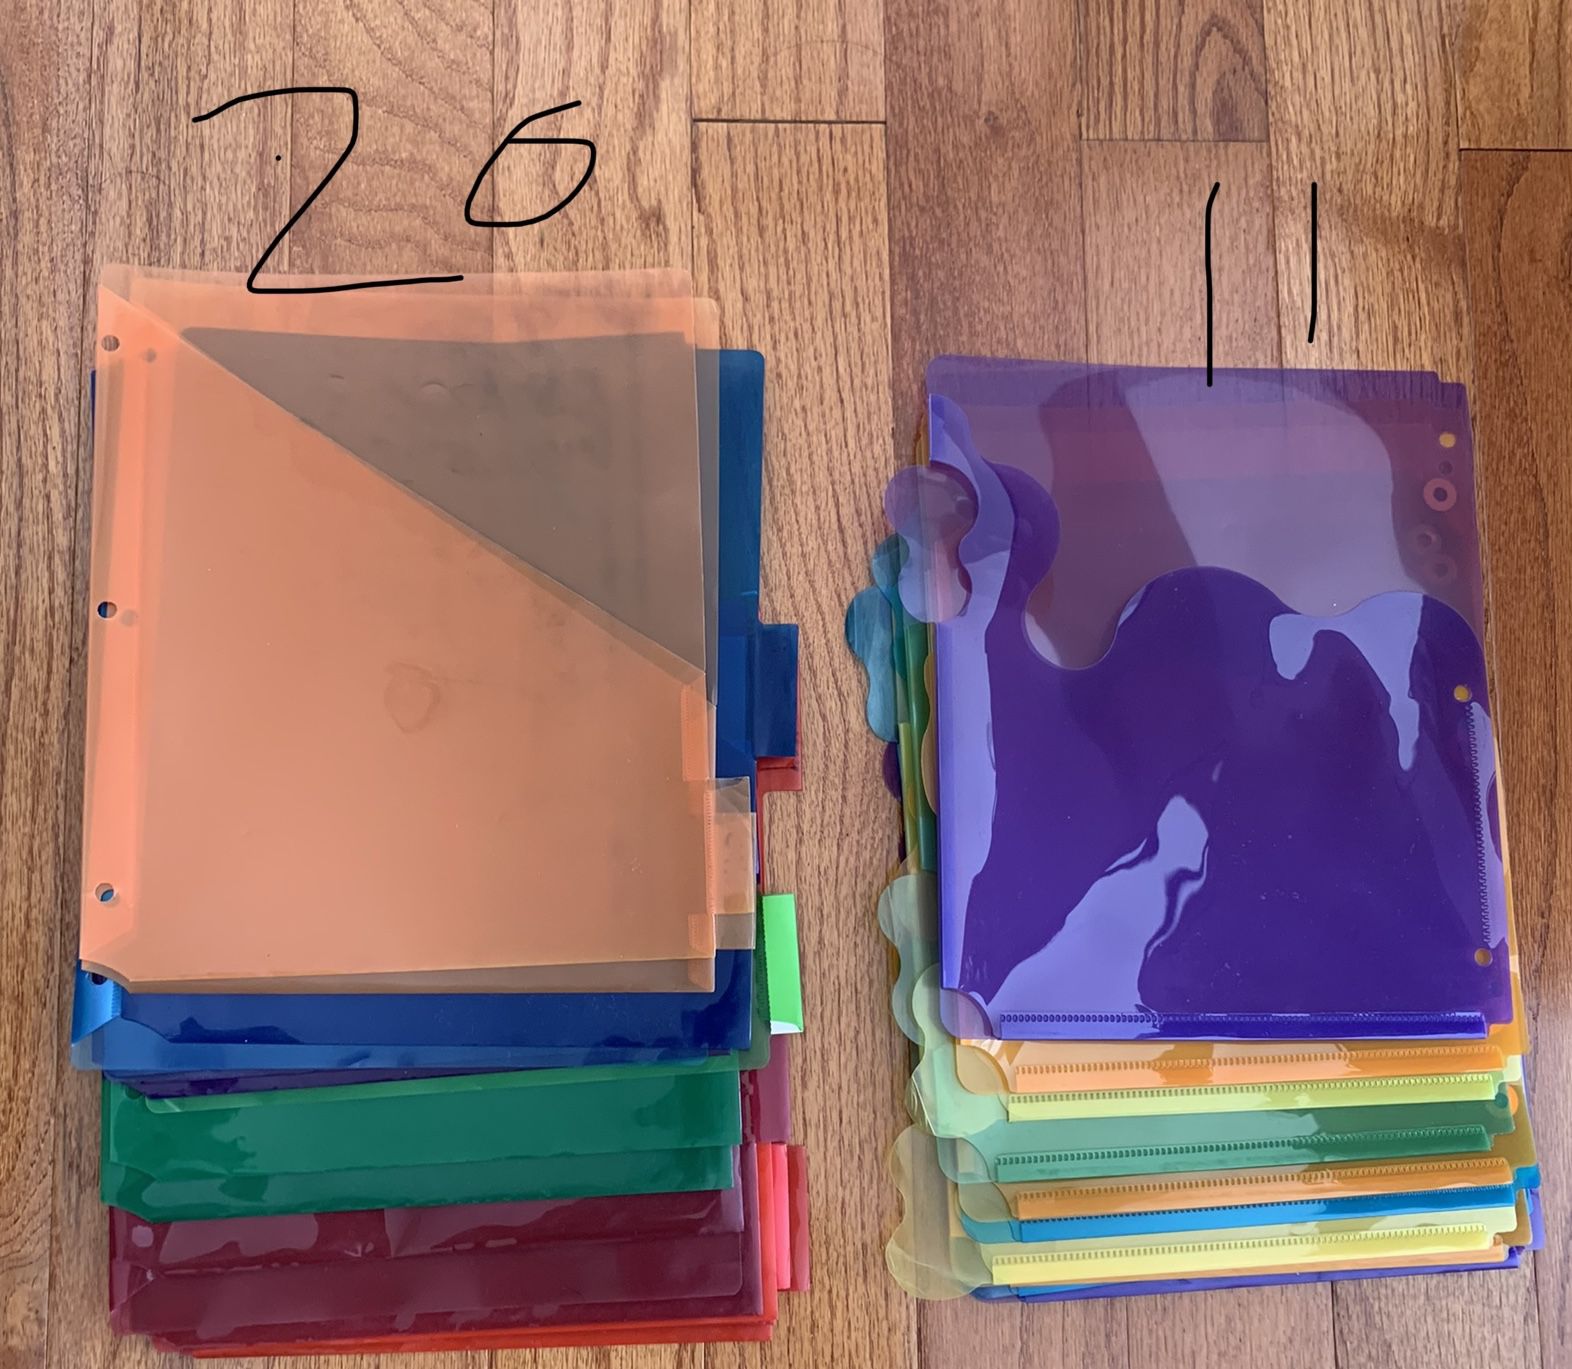 2 Pocket Plastic Folders - 31 (20+11) Available